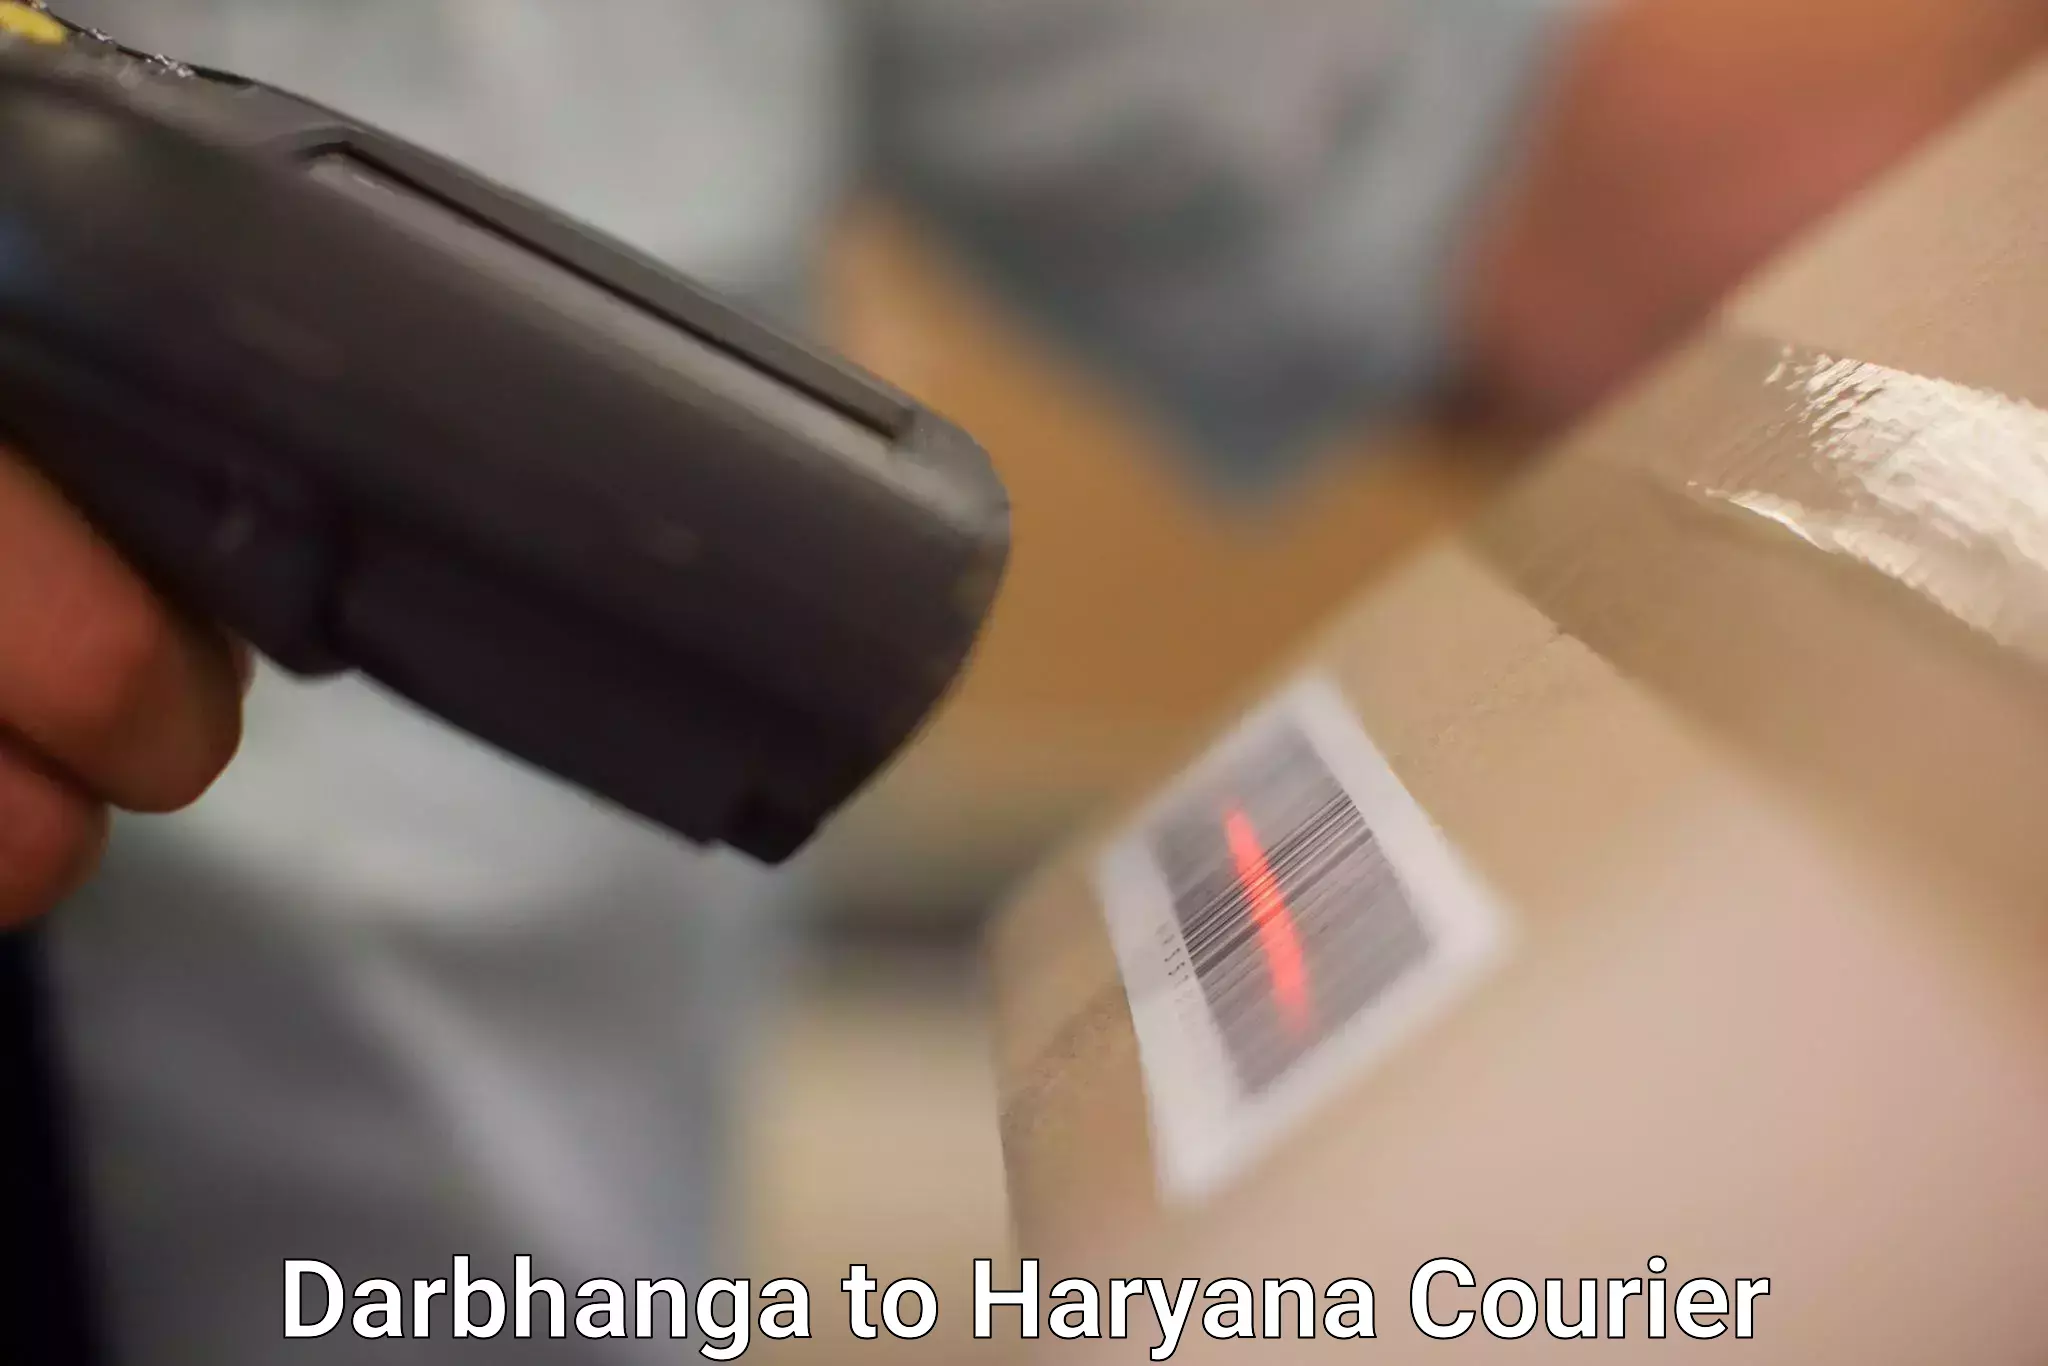 Express delivery capabilities Darbhanga to Haryana